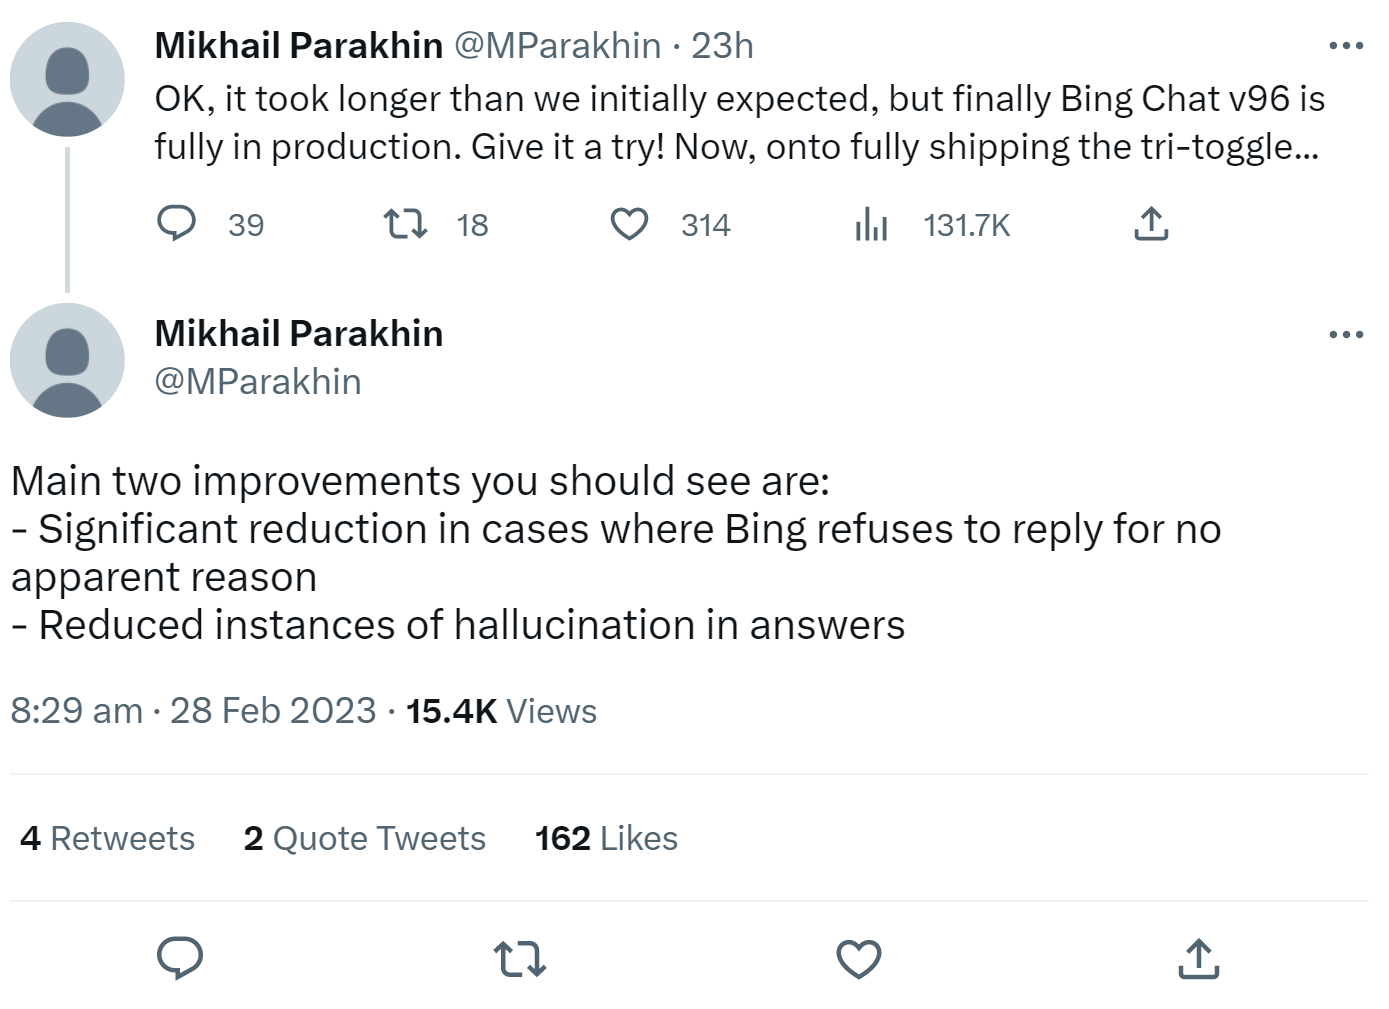 Bing Chat v96 ist live: Mikhail Parakhin auf Twitter